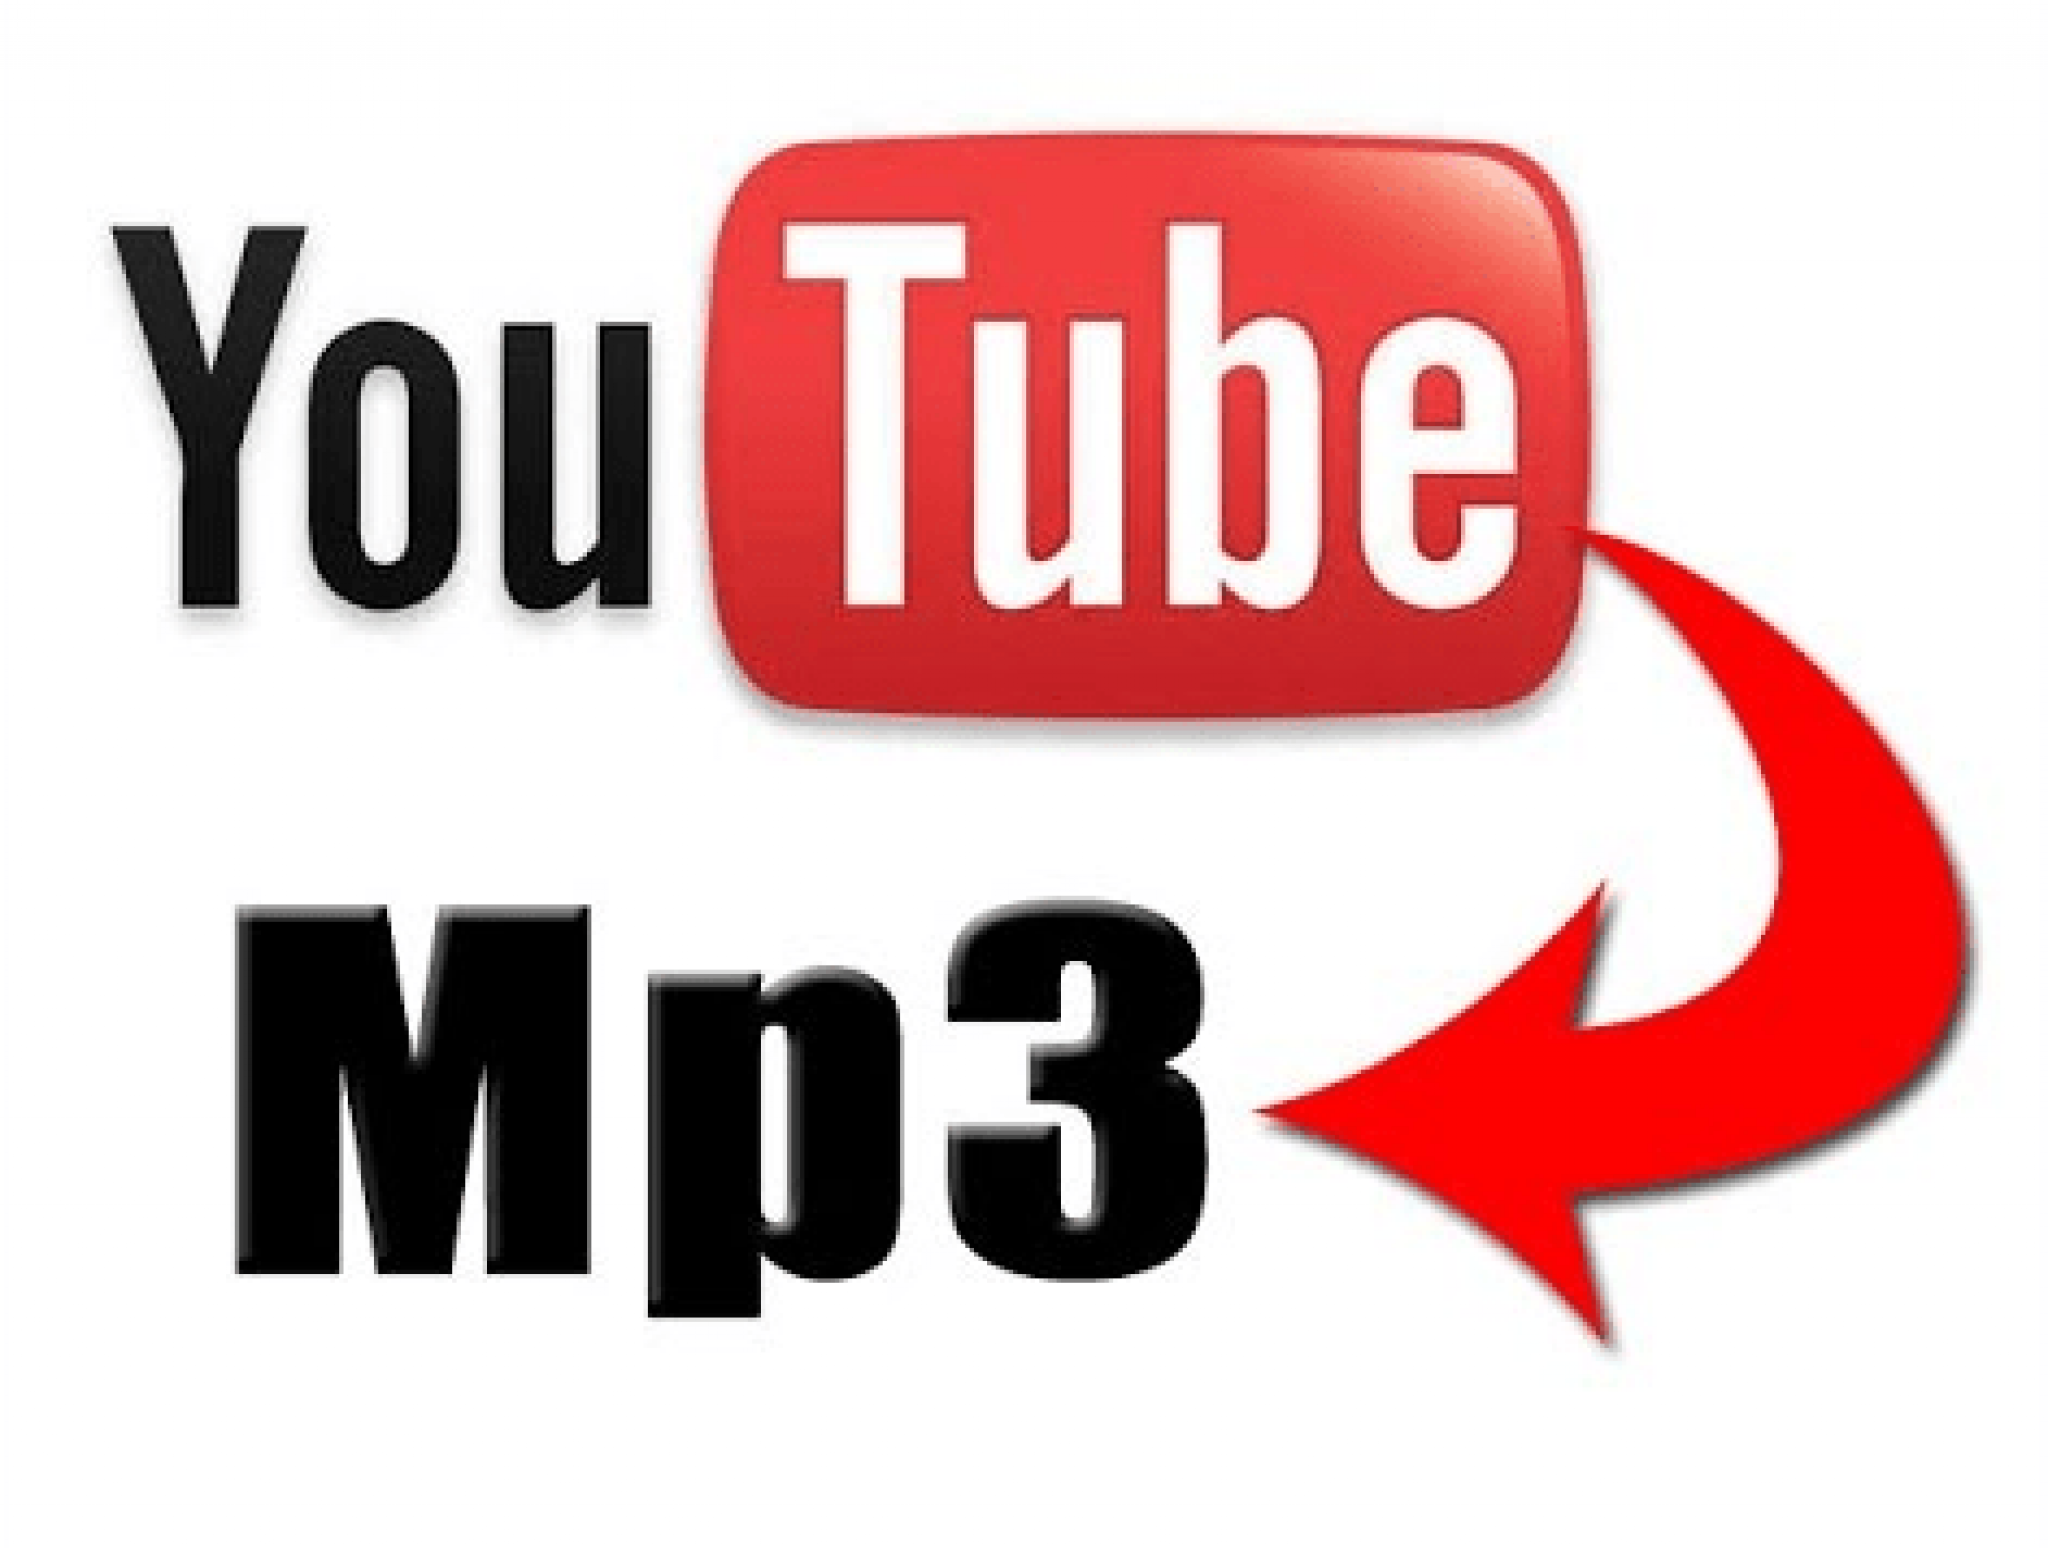 youtube.mp3